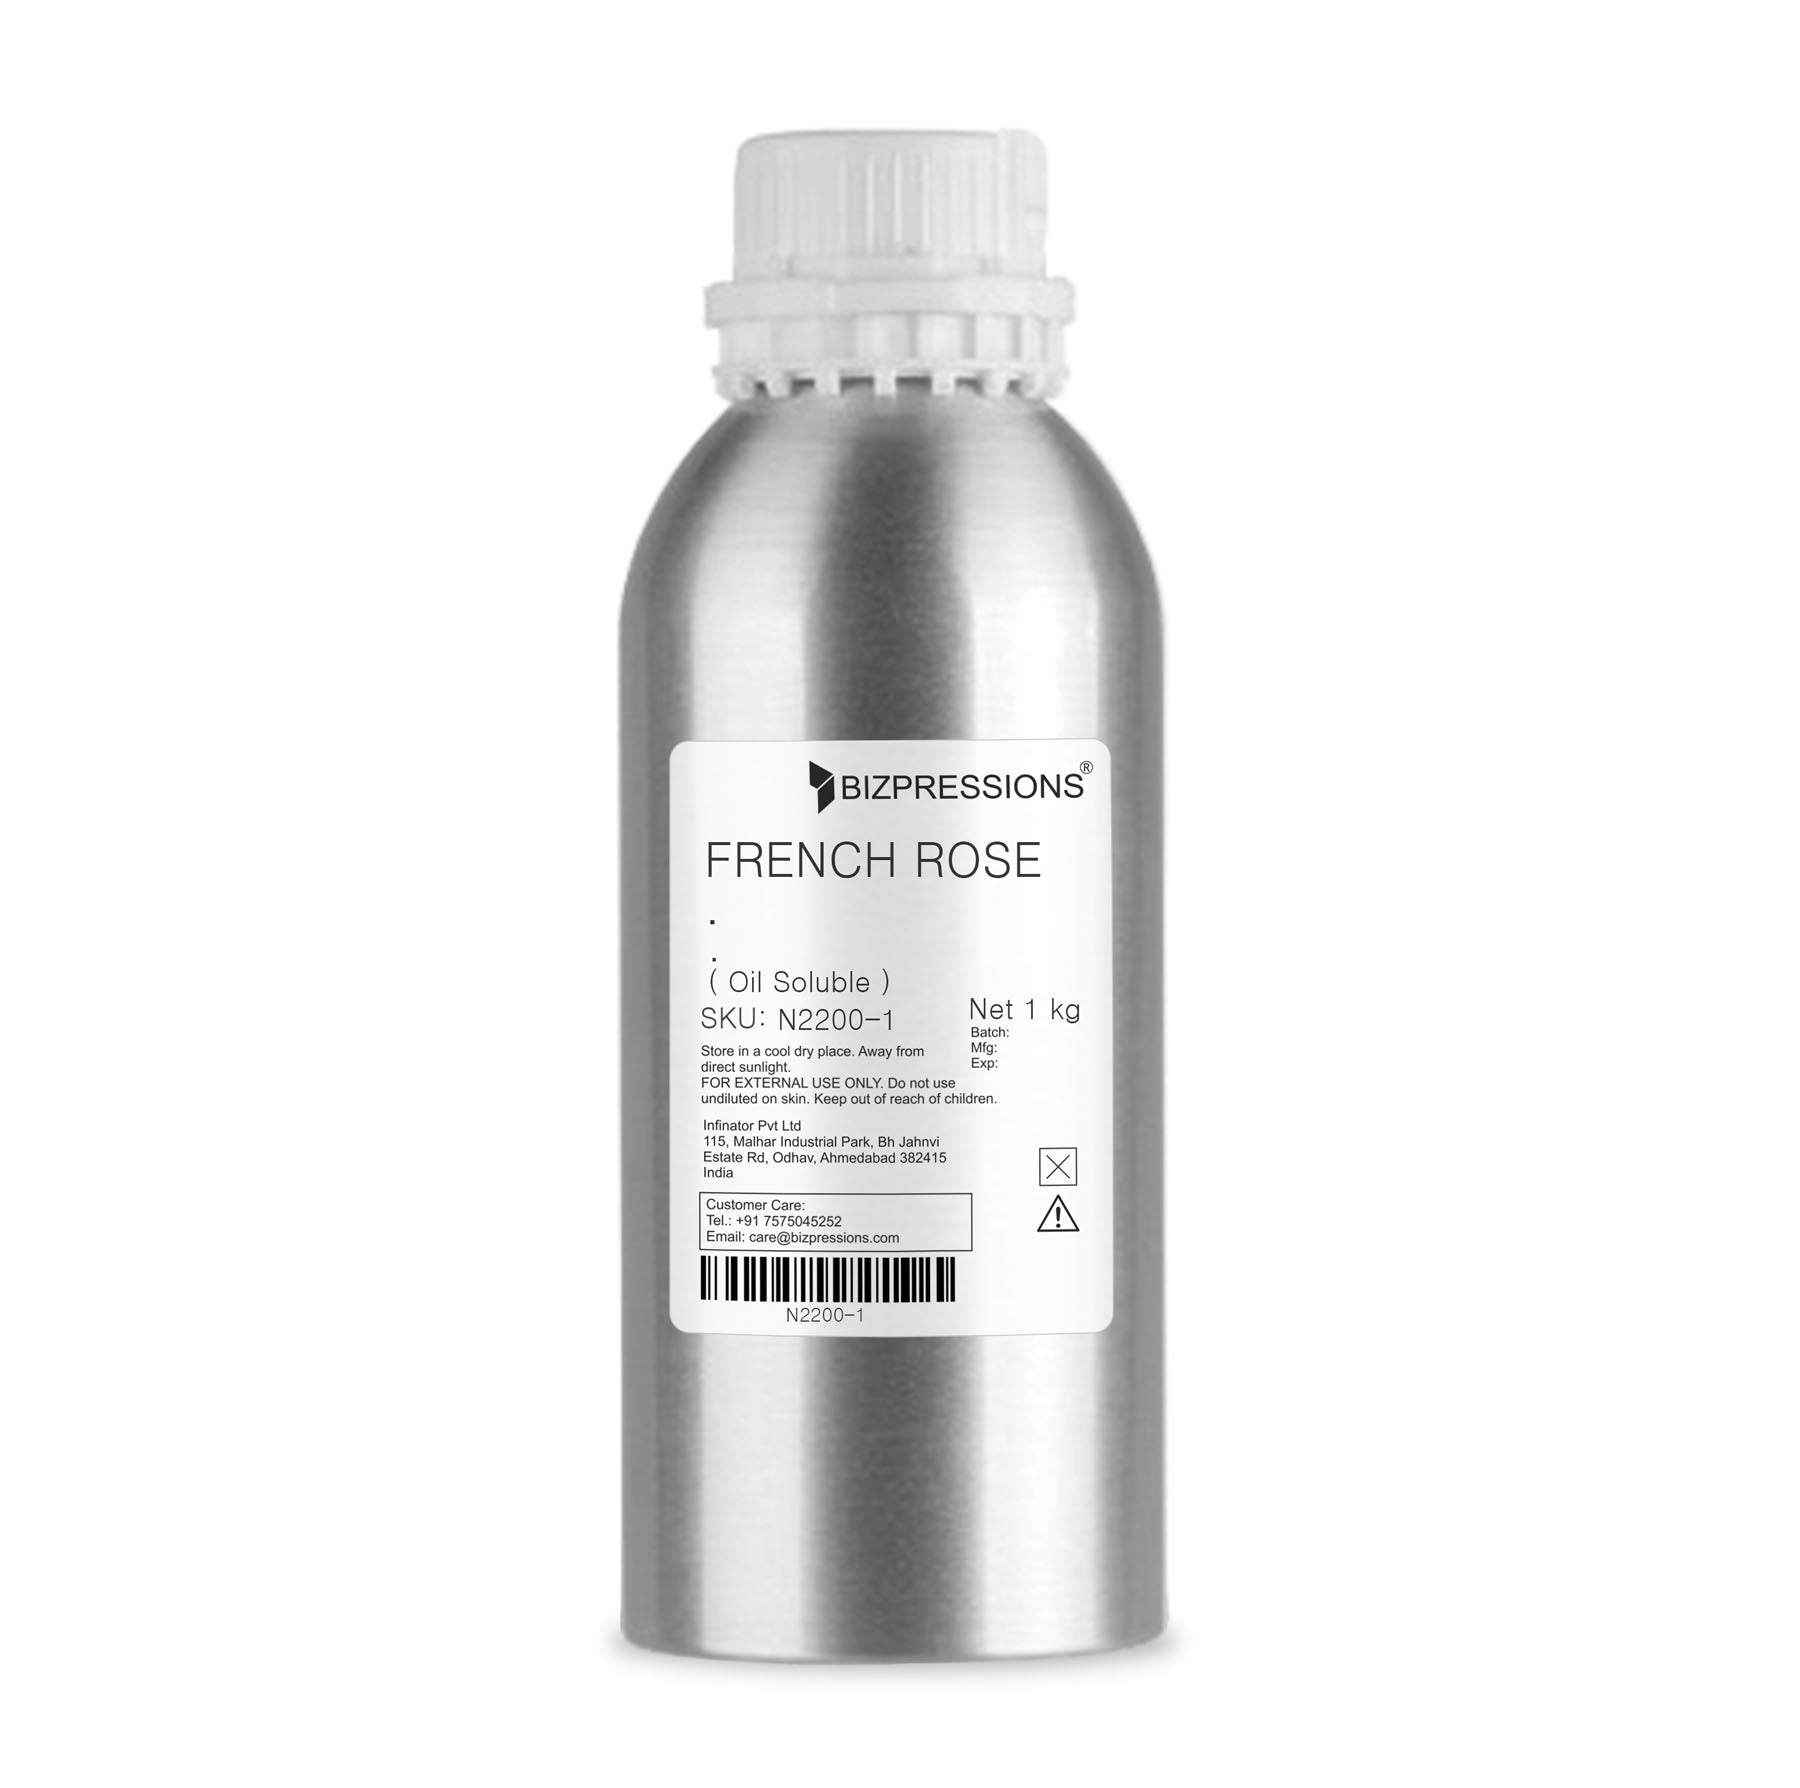 FRENCH ROSE - Fragrance ( Oil Soluble ) - 1 kg